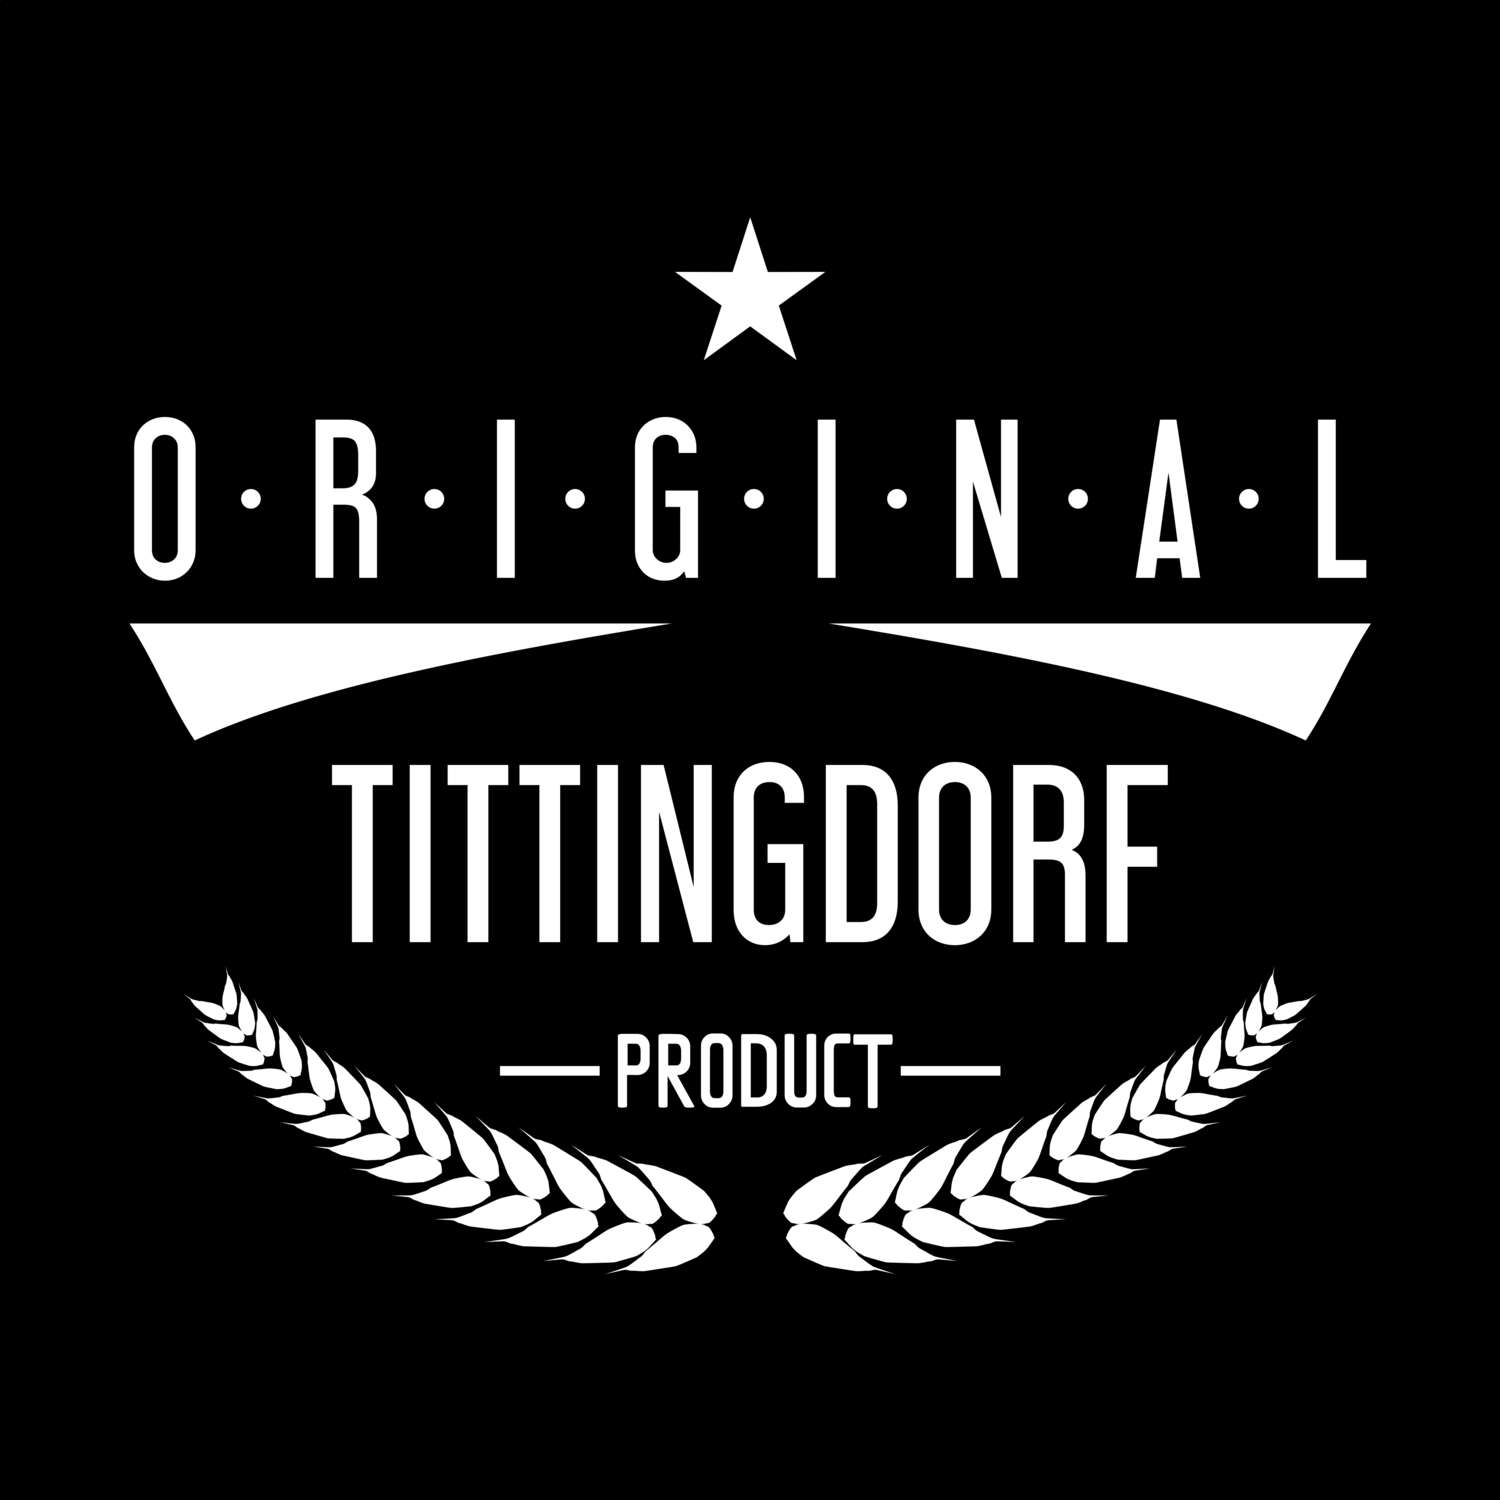 Tittingdorf T-Shirt »Original Product«